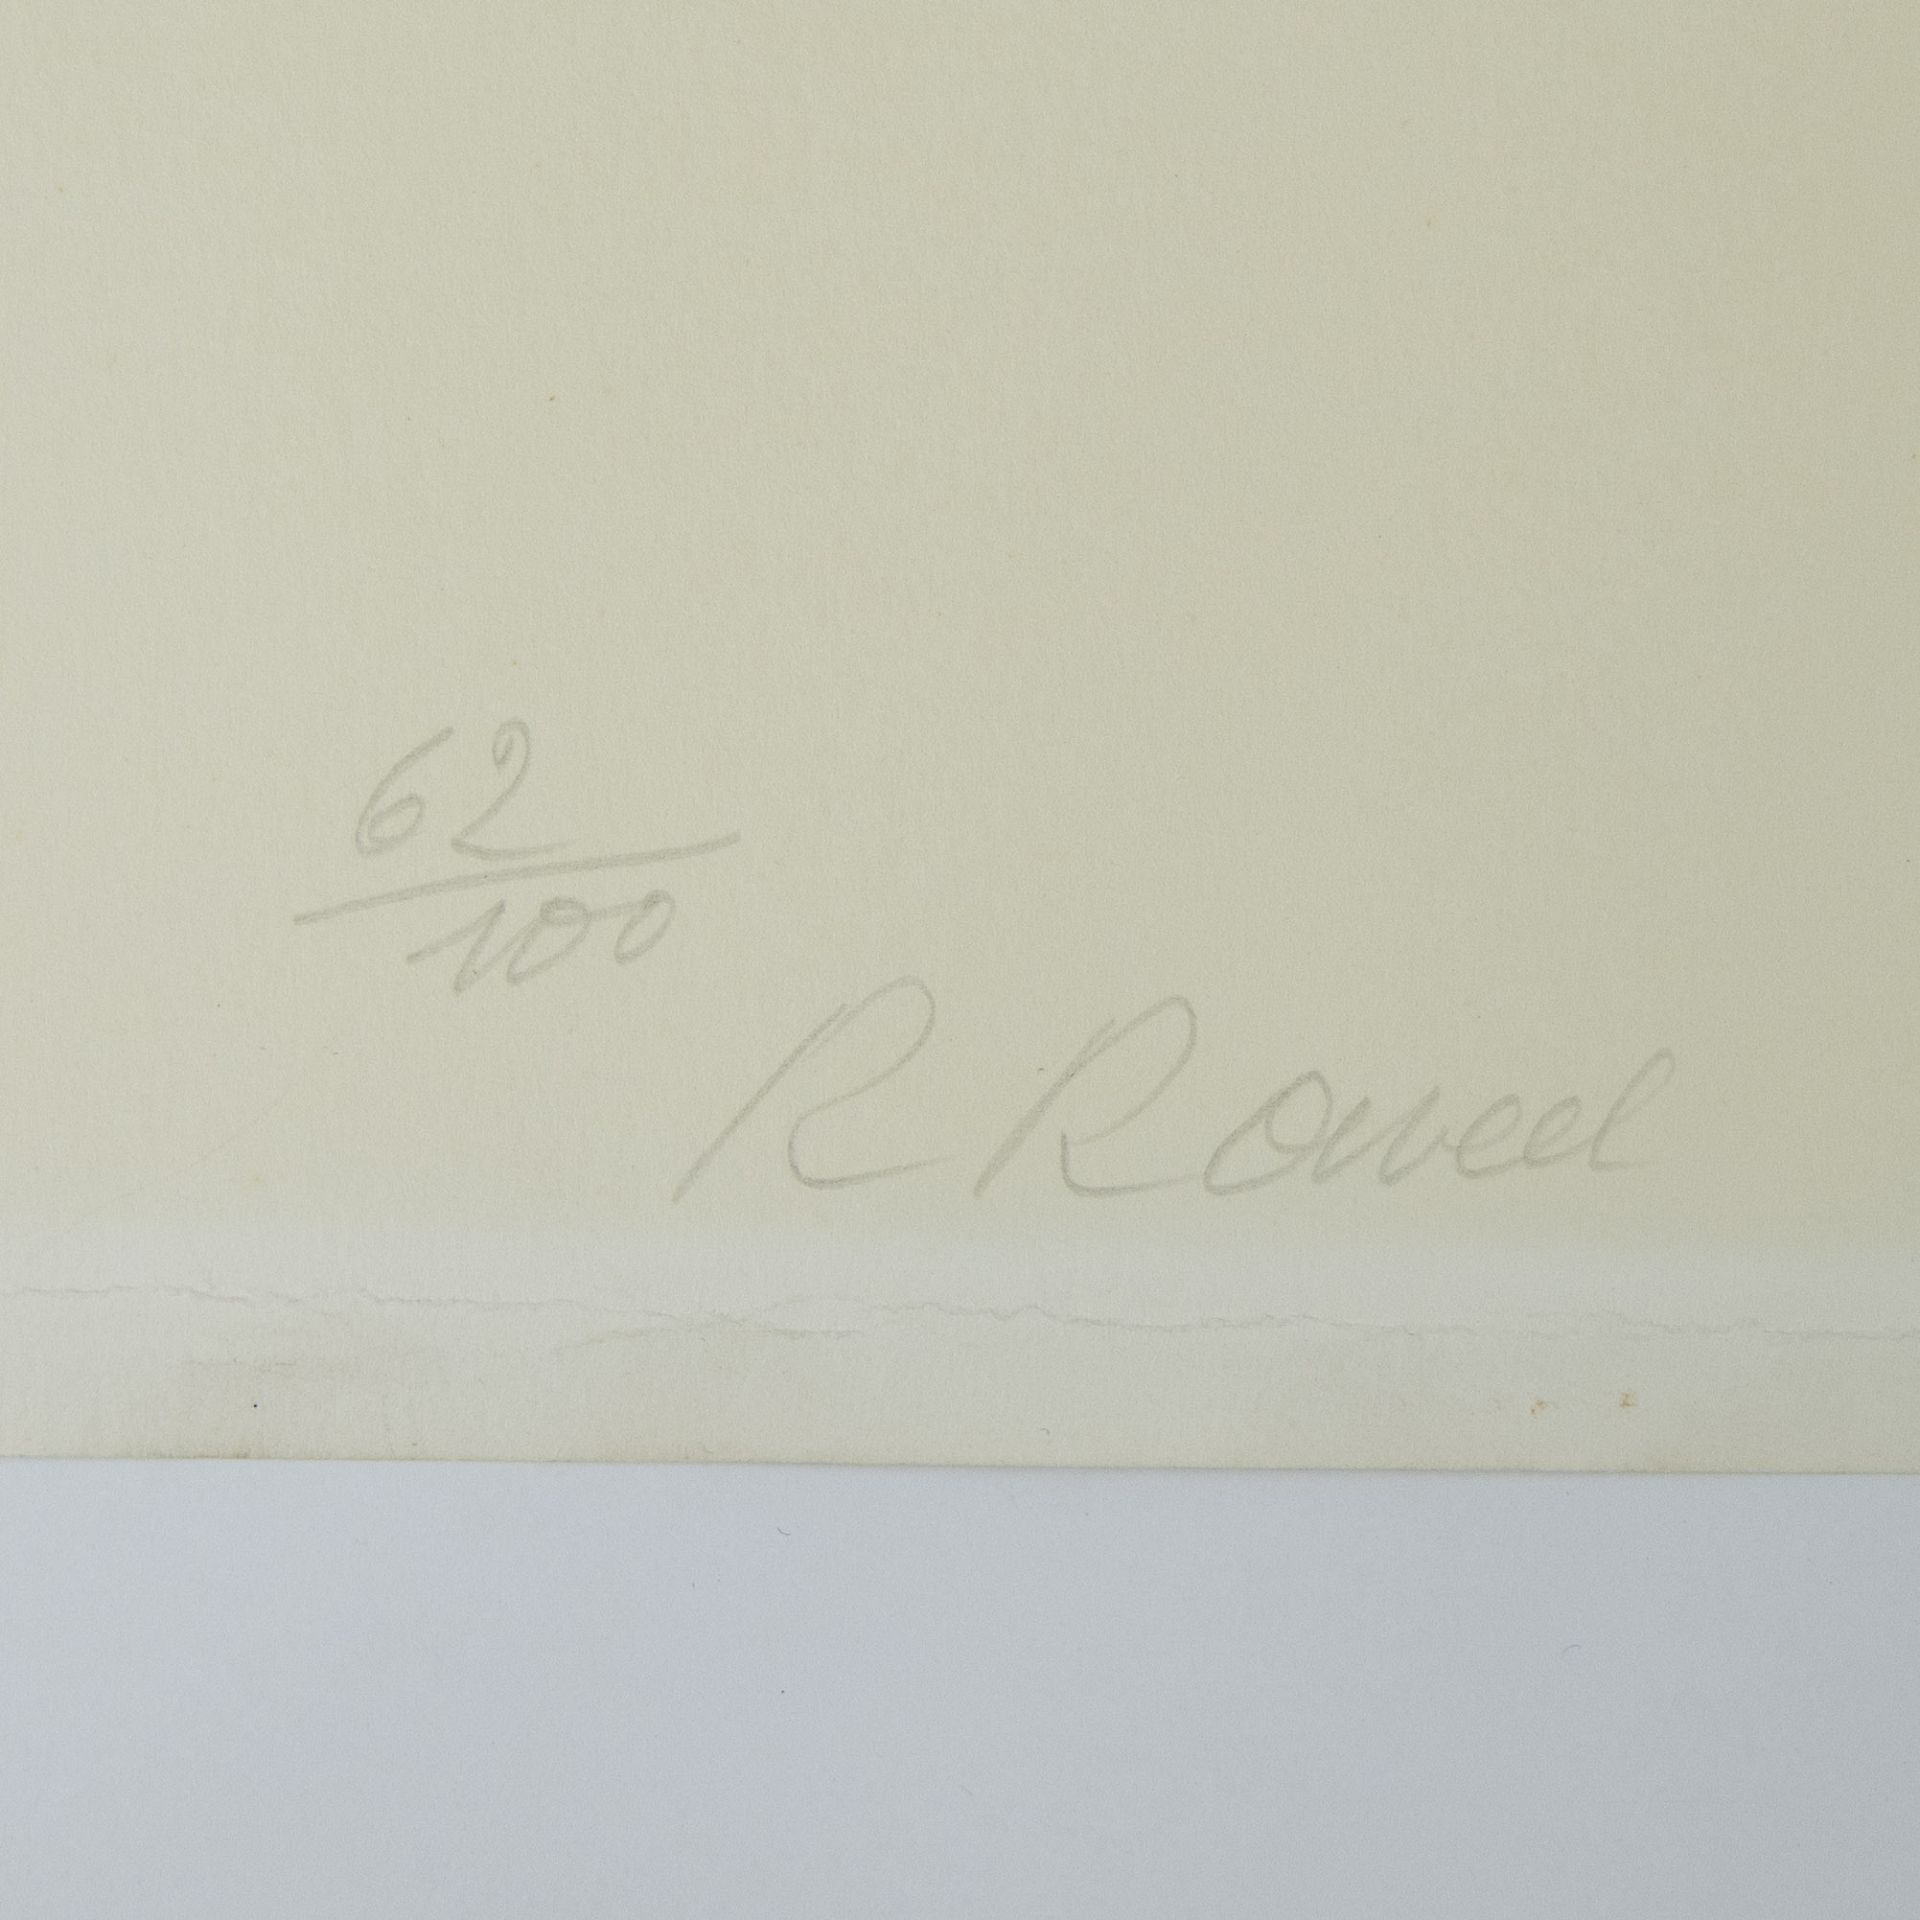 Roger RAVEEL (1921-2013), colour screenprint 'De paal van Bonheiden', numbered 62/100 and signed - Image 2 of 2